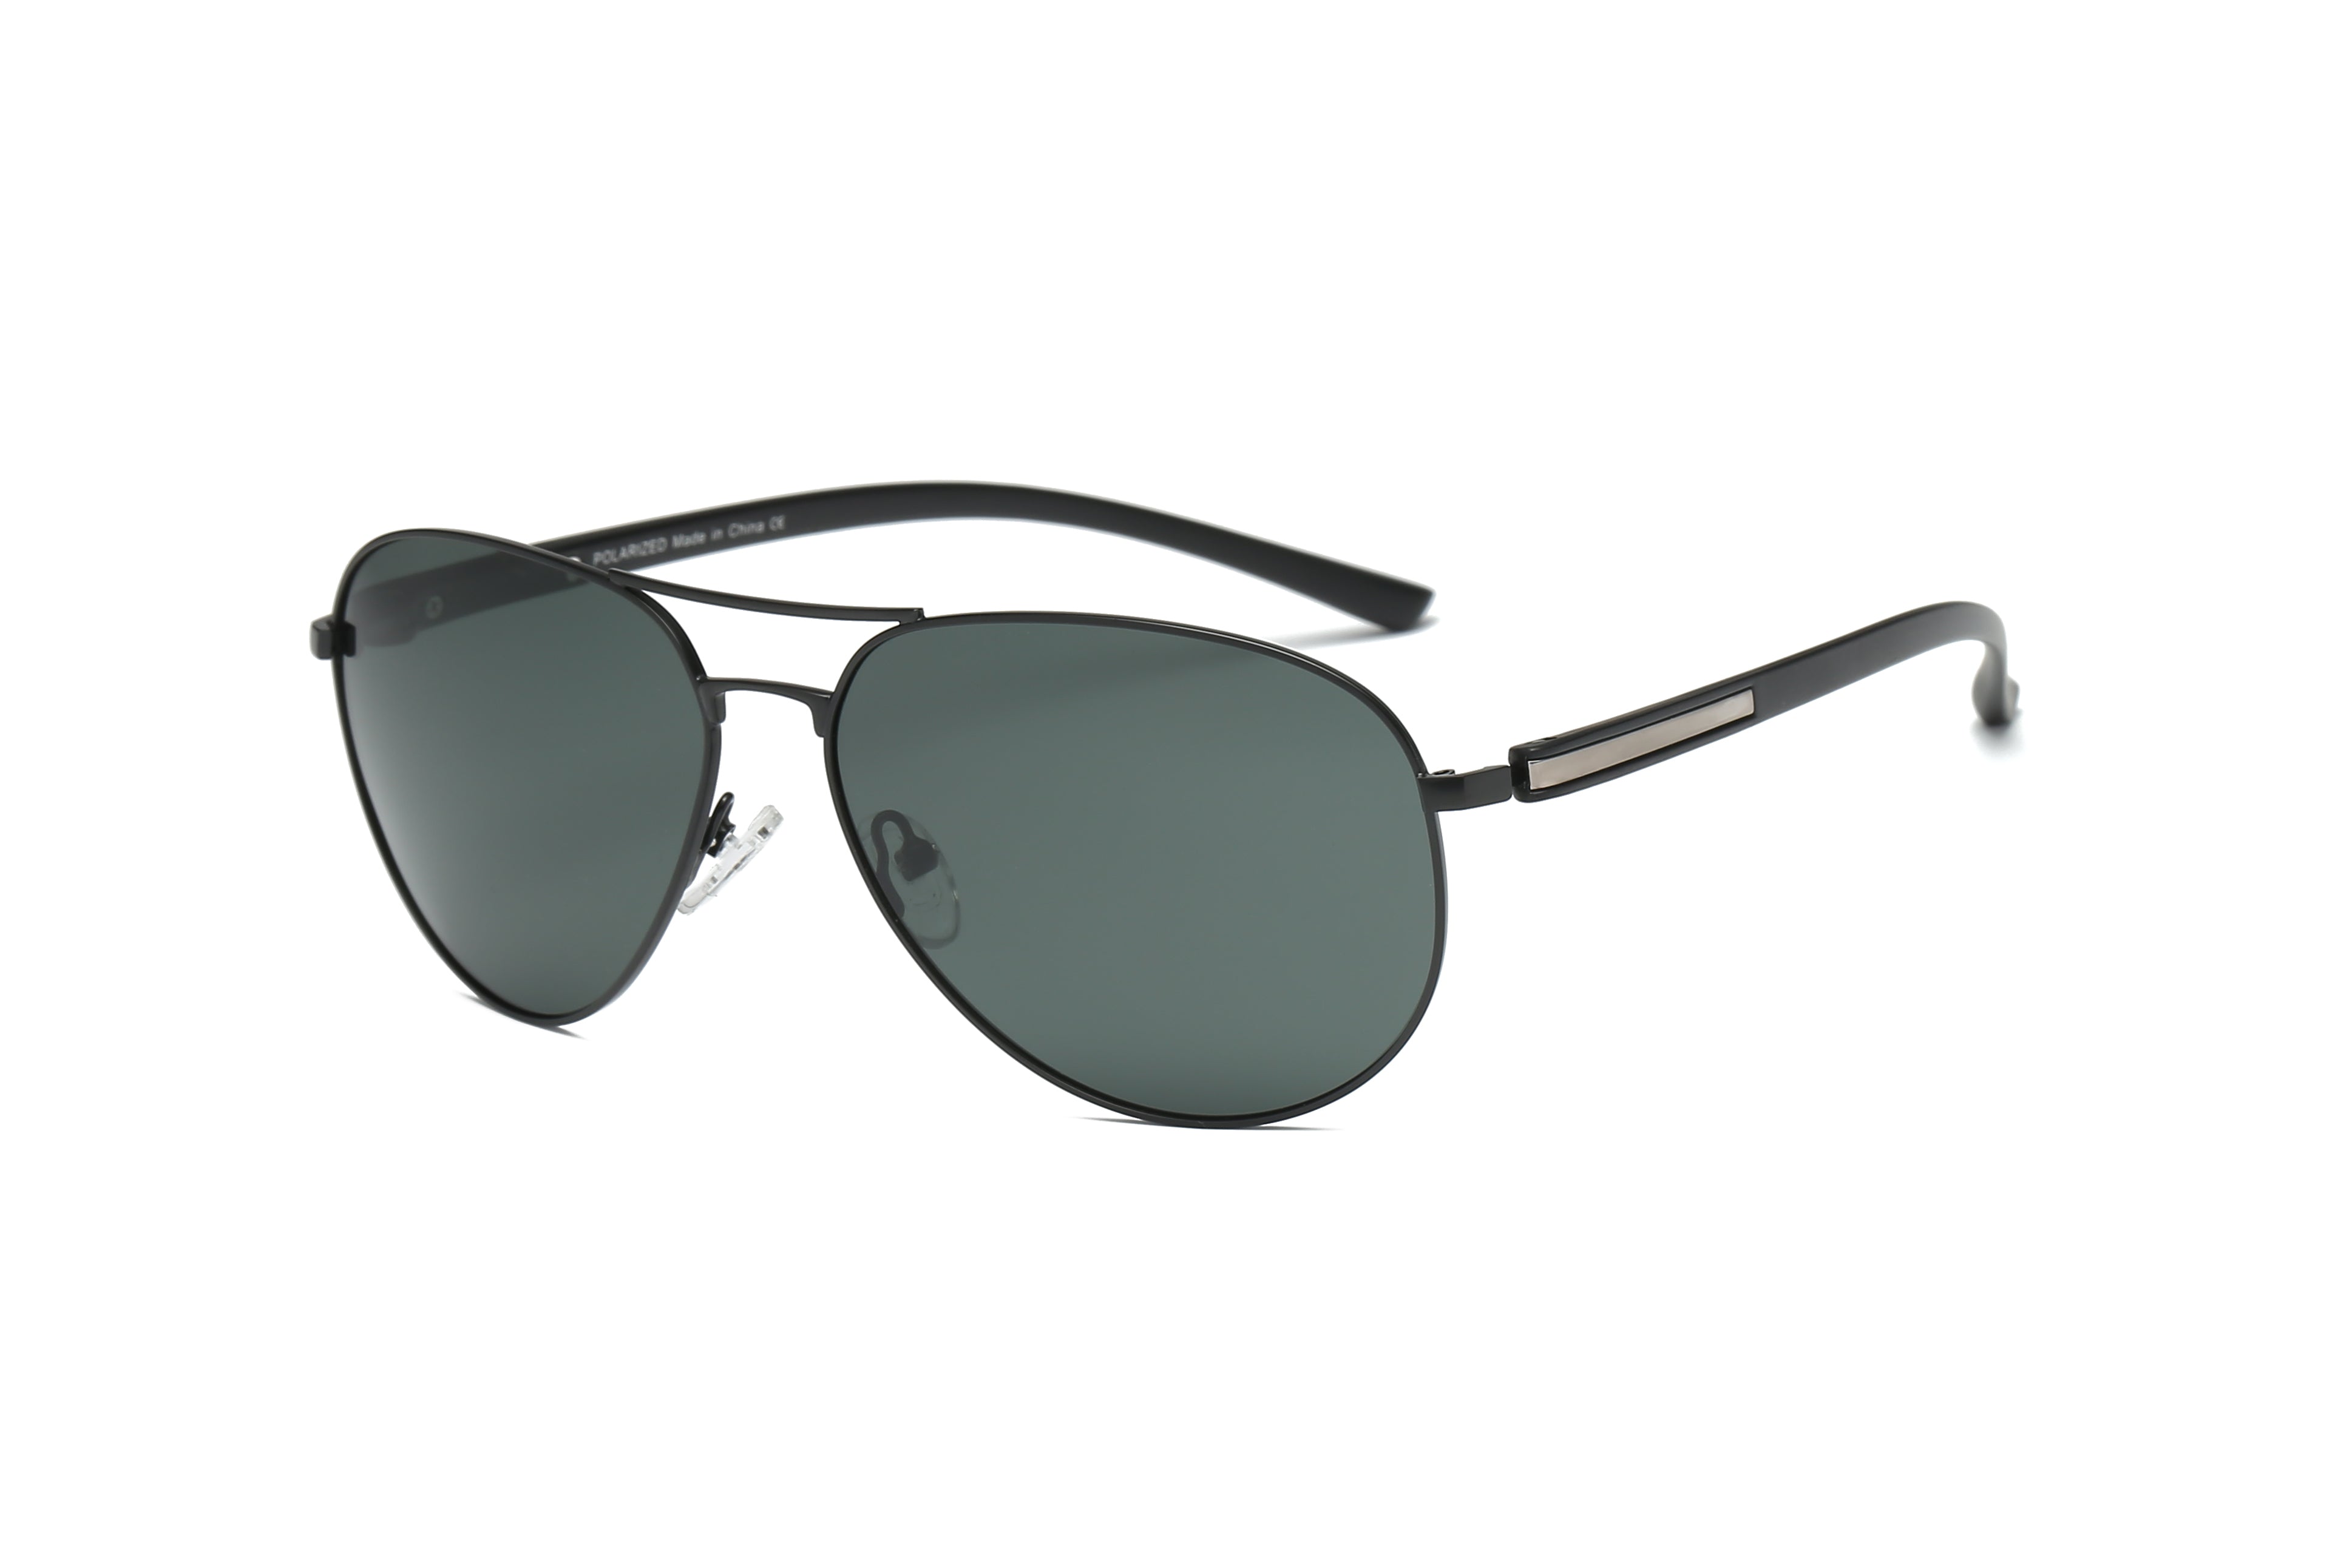 P4001 - Classic Polarized Aviator Sunglasses Black/Olive